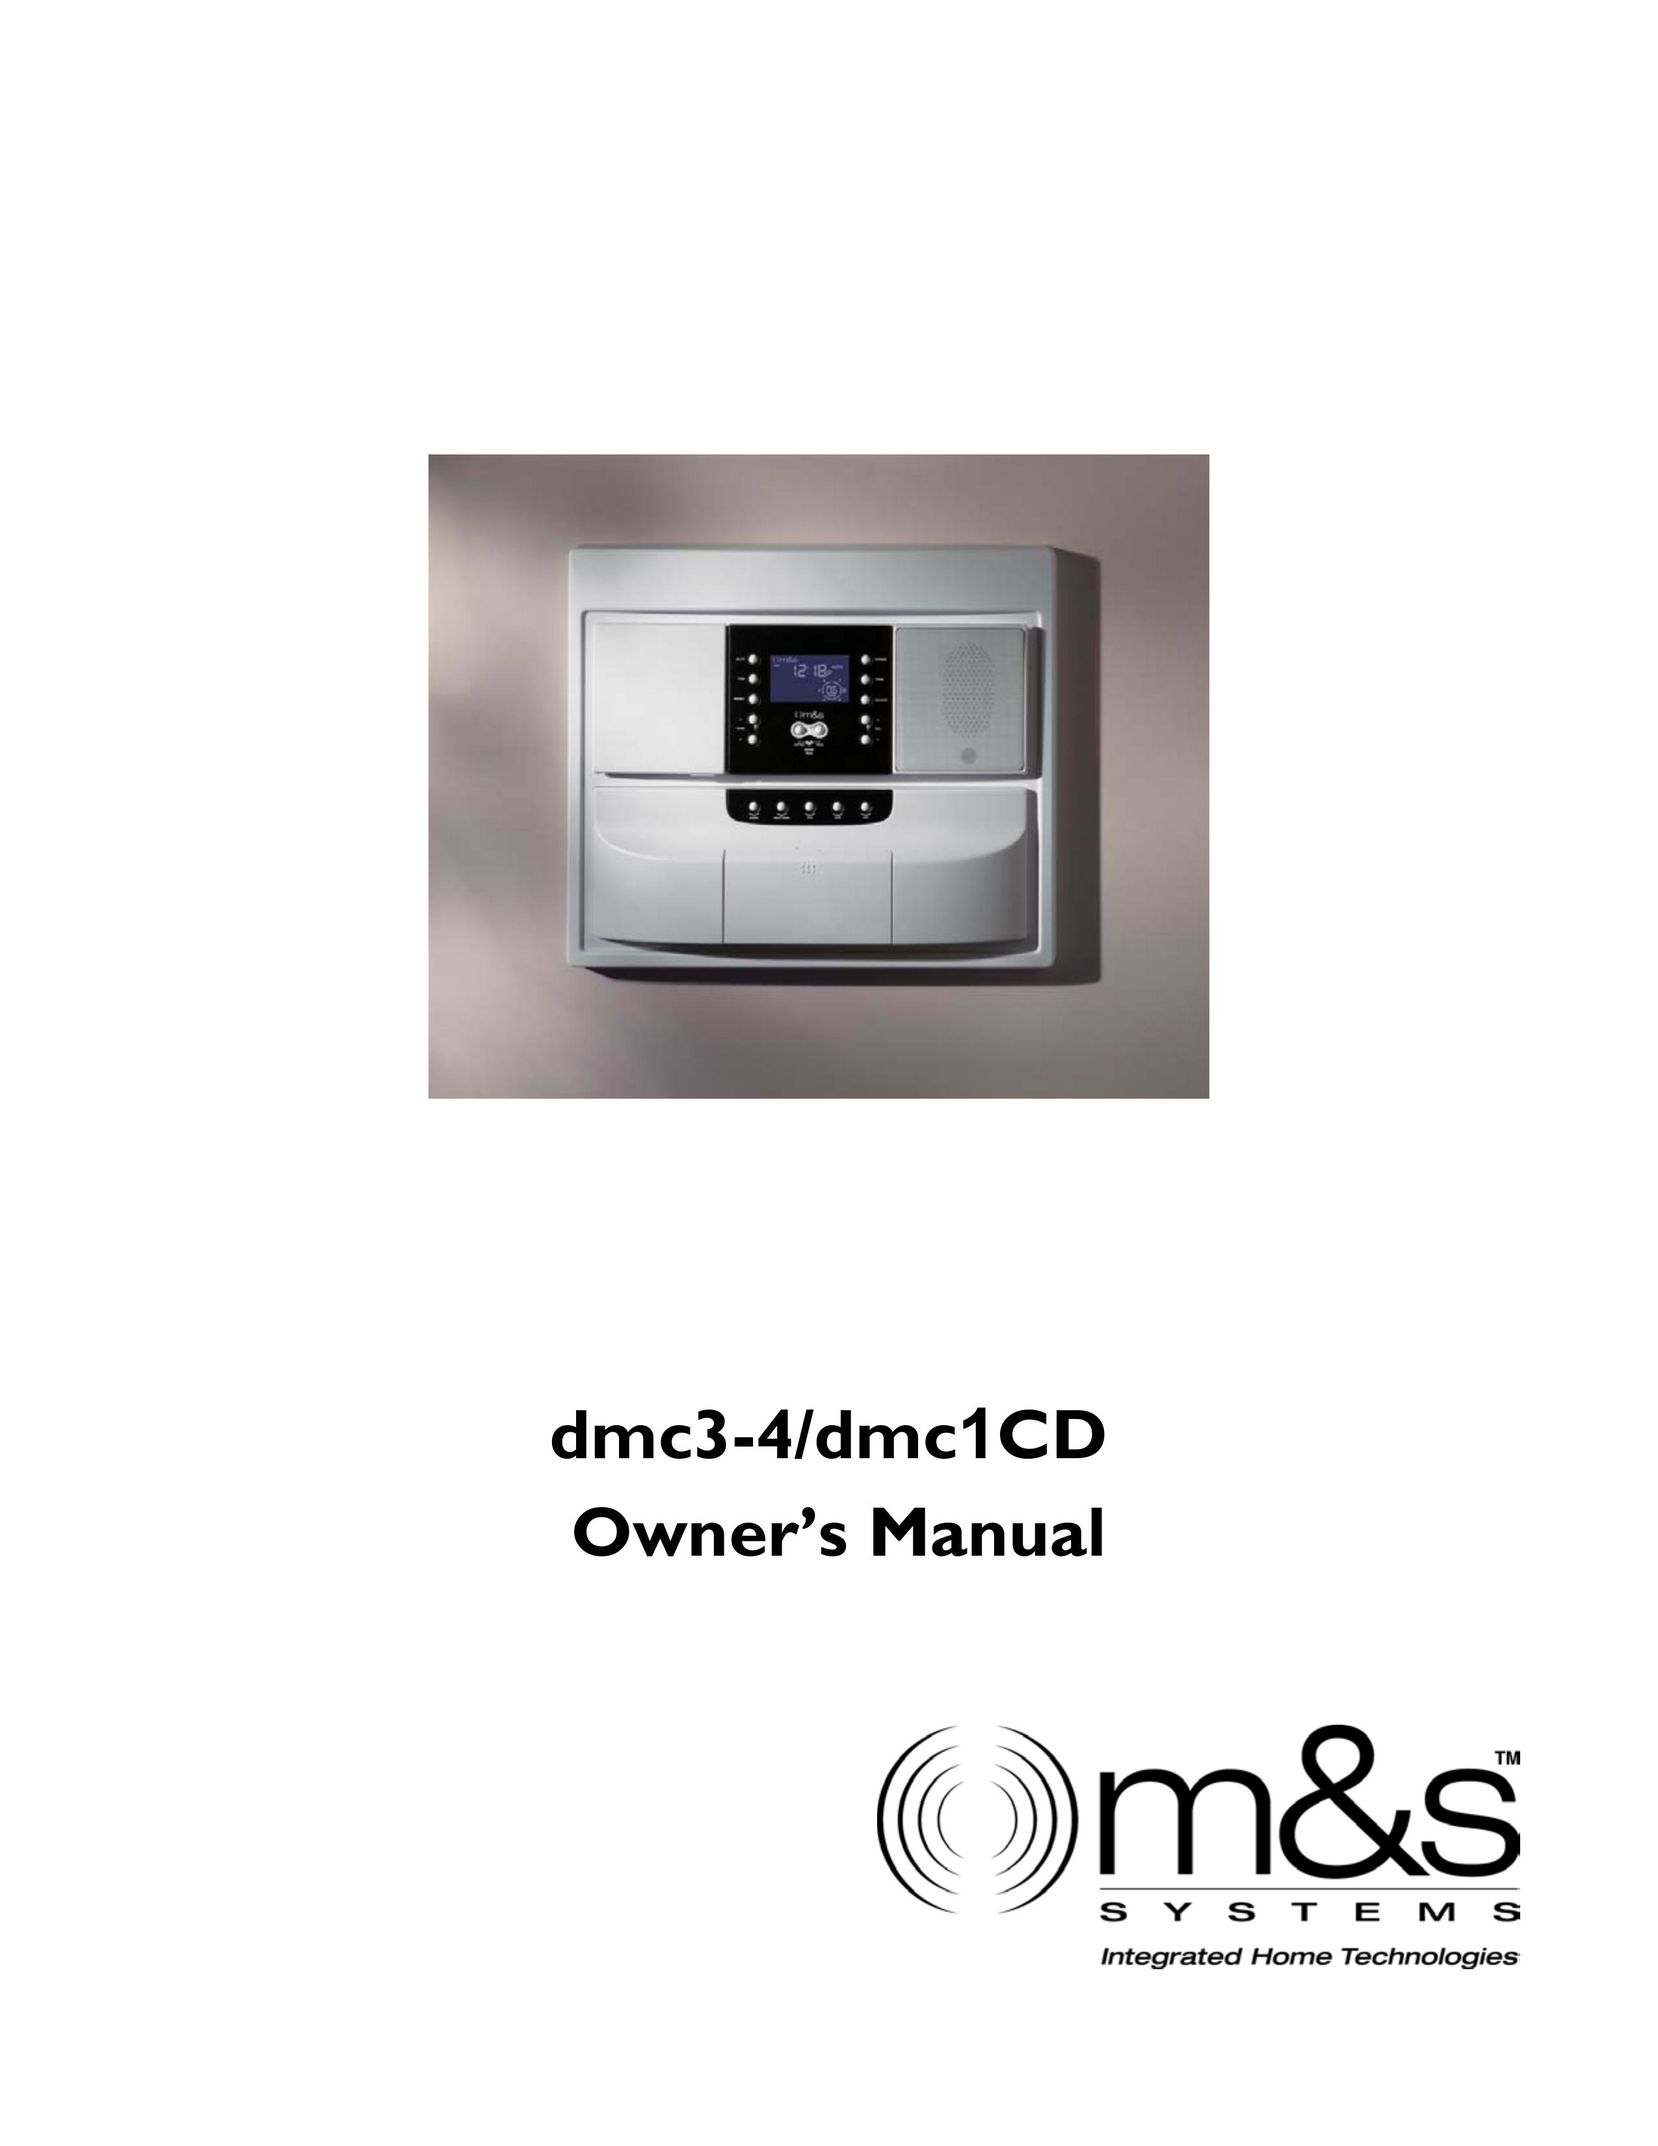 M&S Systems dmc3-4/dmc1CD Speaker User Manual (Page 1)